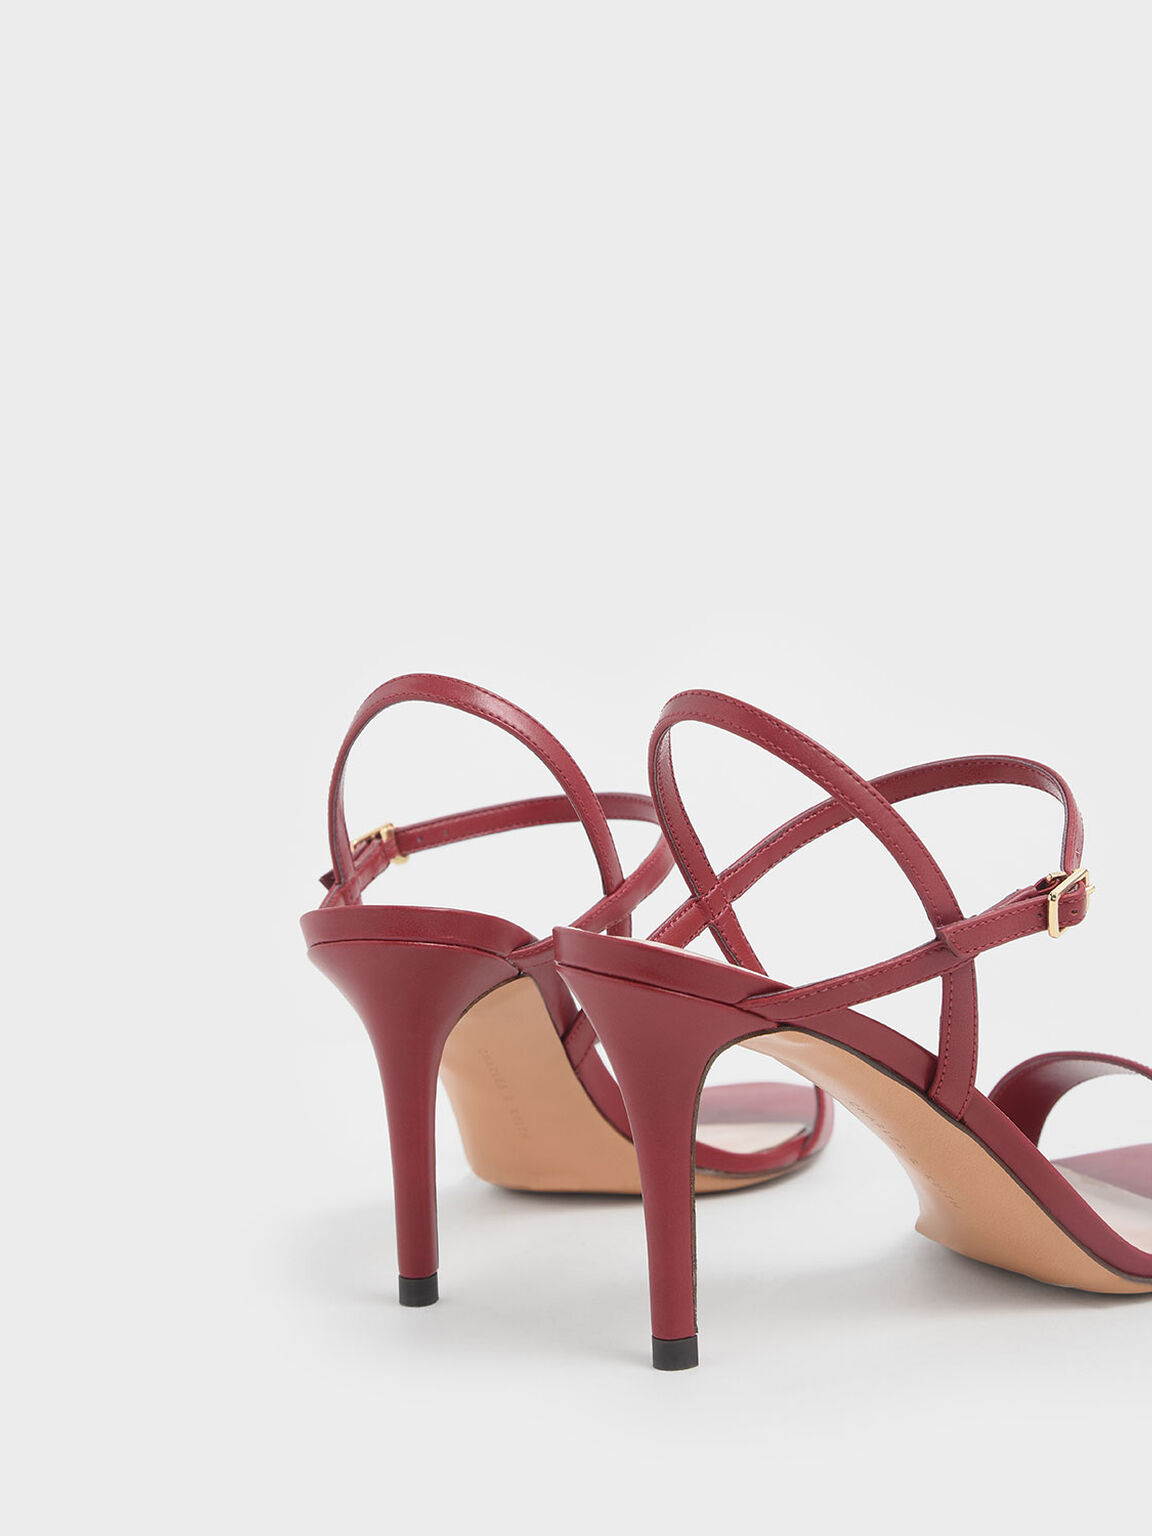 Sandal Classic Stiletto Heel, Red, hi-res